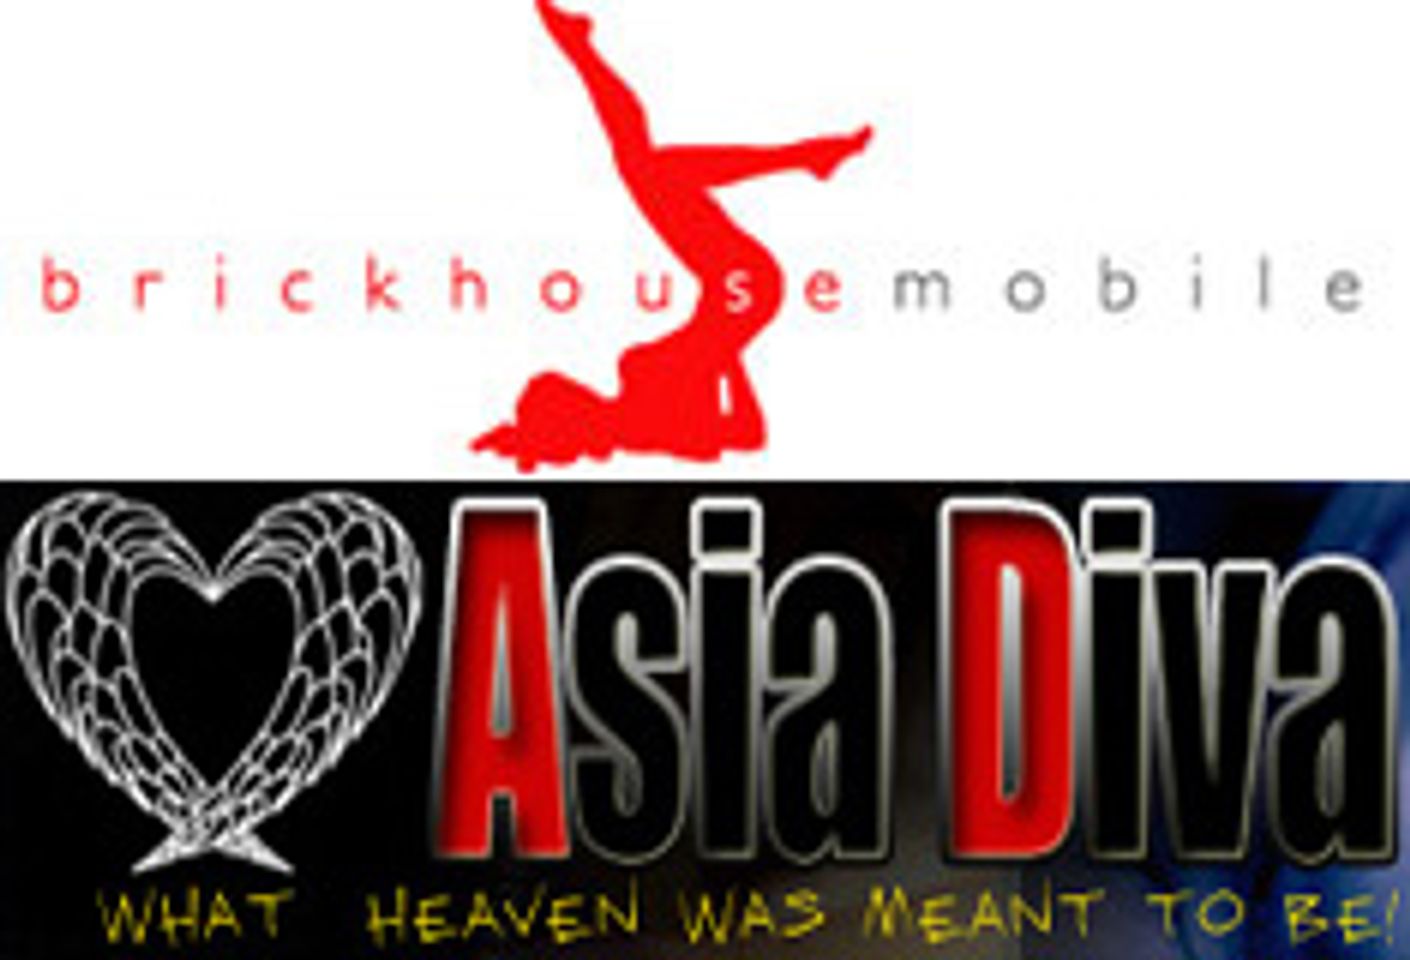 Brickhouse Mobile and Asia Diva Announce Mobile Partnership